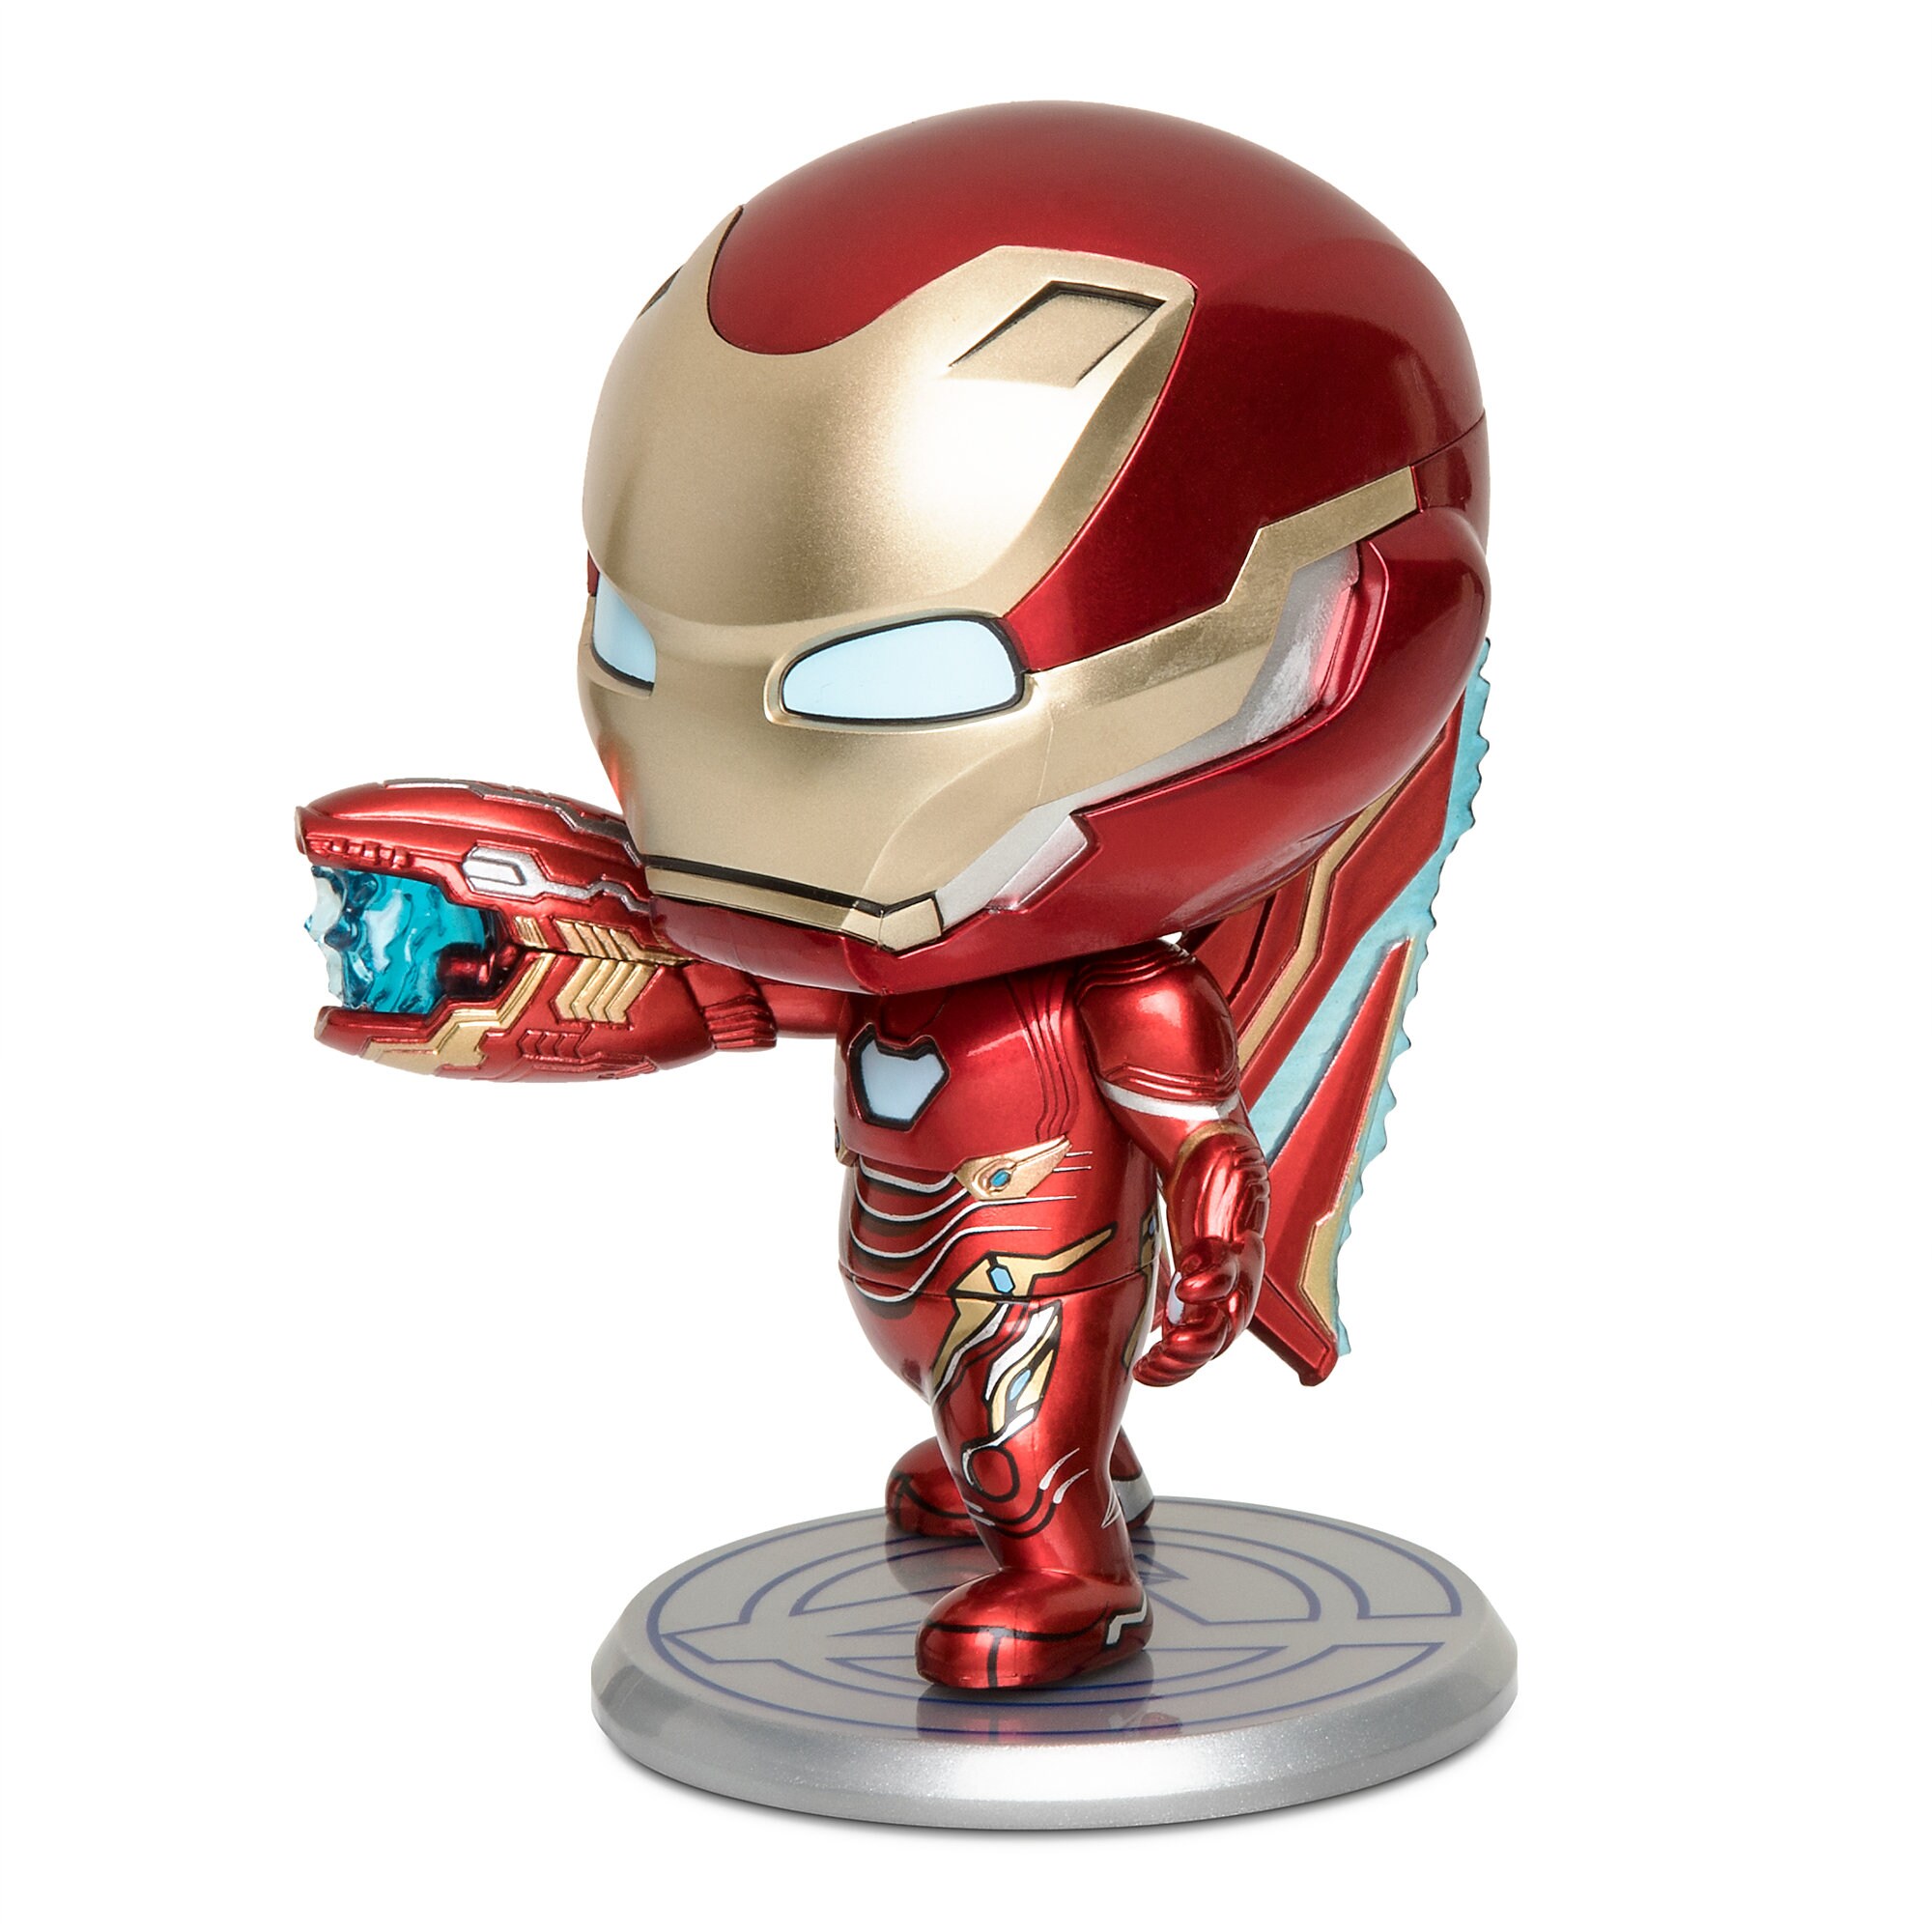 Iron Man Mark L Cosbaby Bobble-Head Figure by Hot Toys - Marvel's Avengers: Endgame